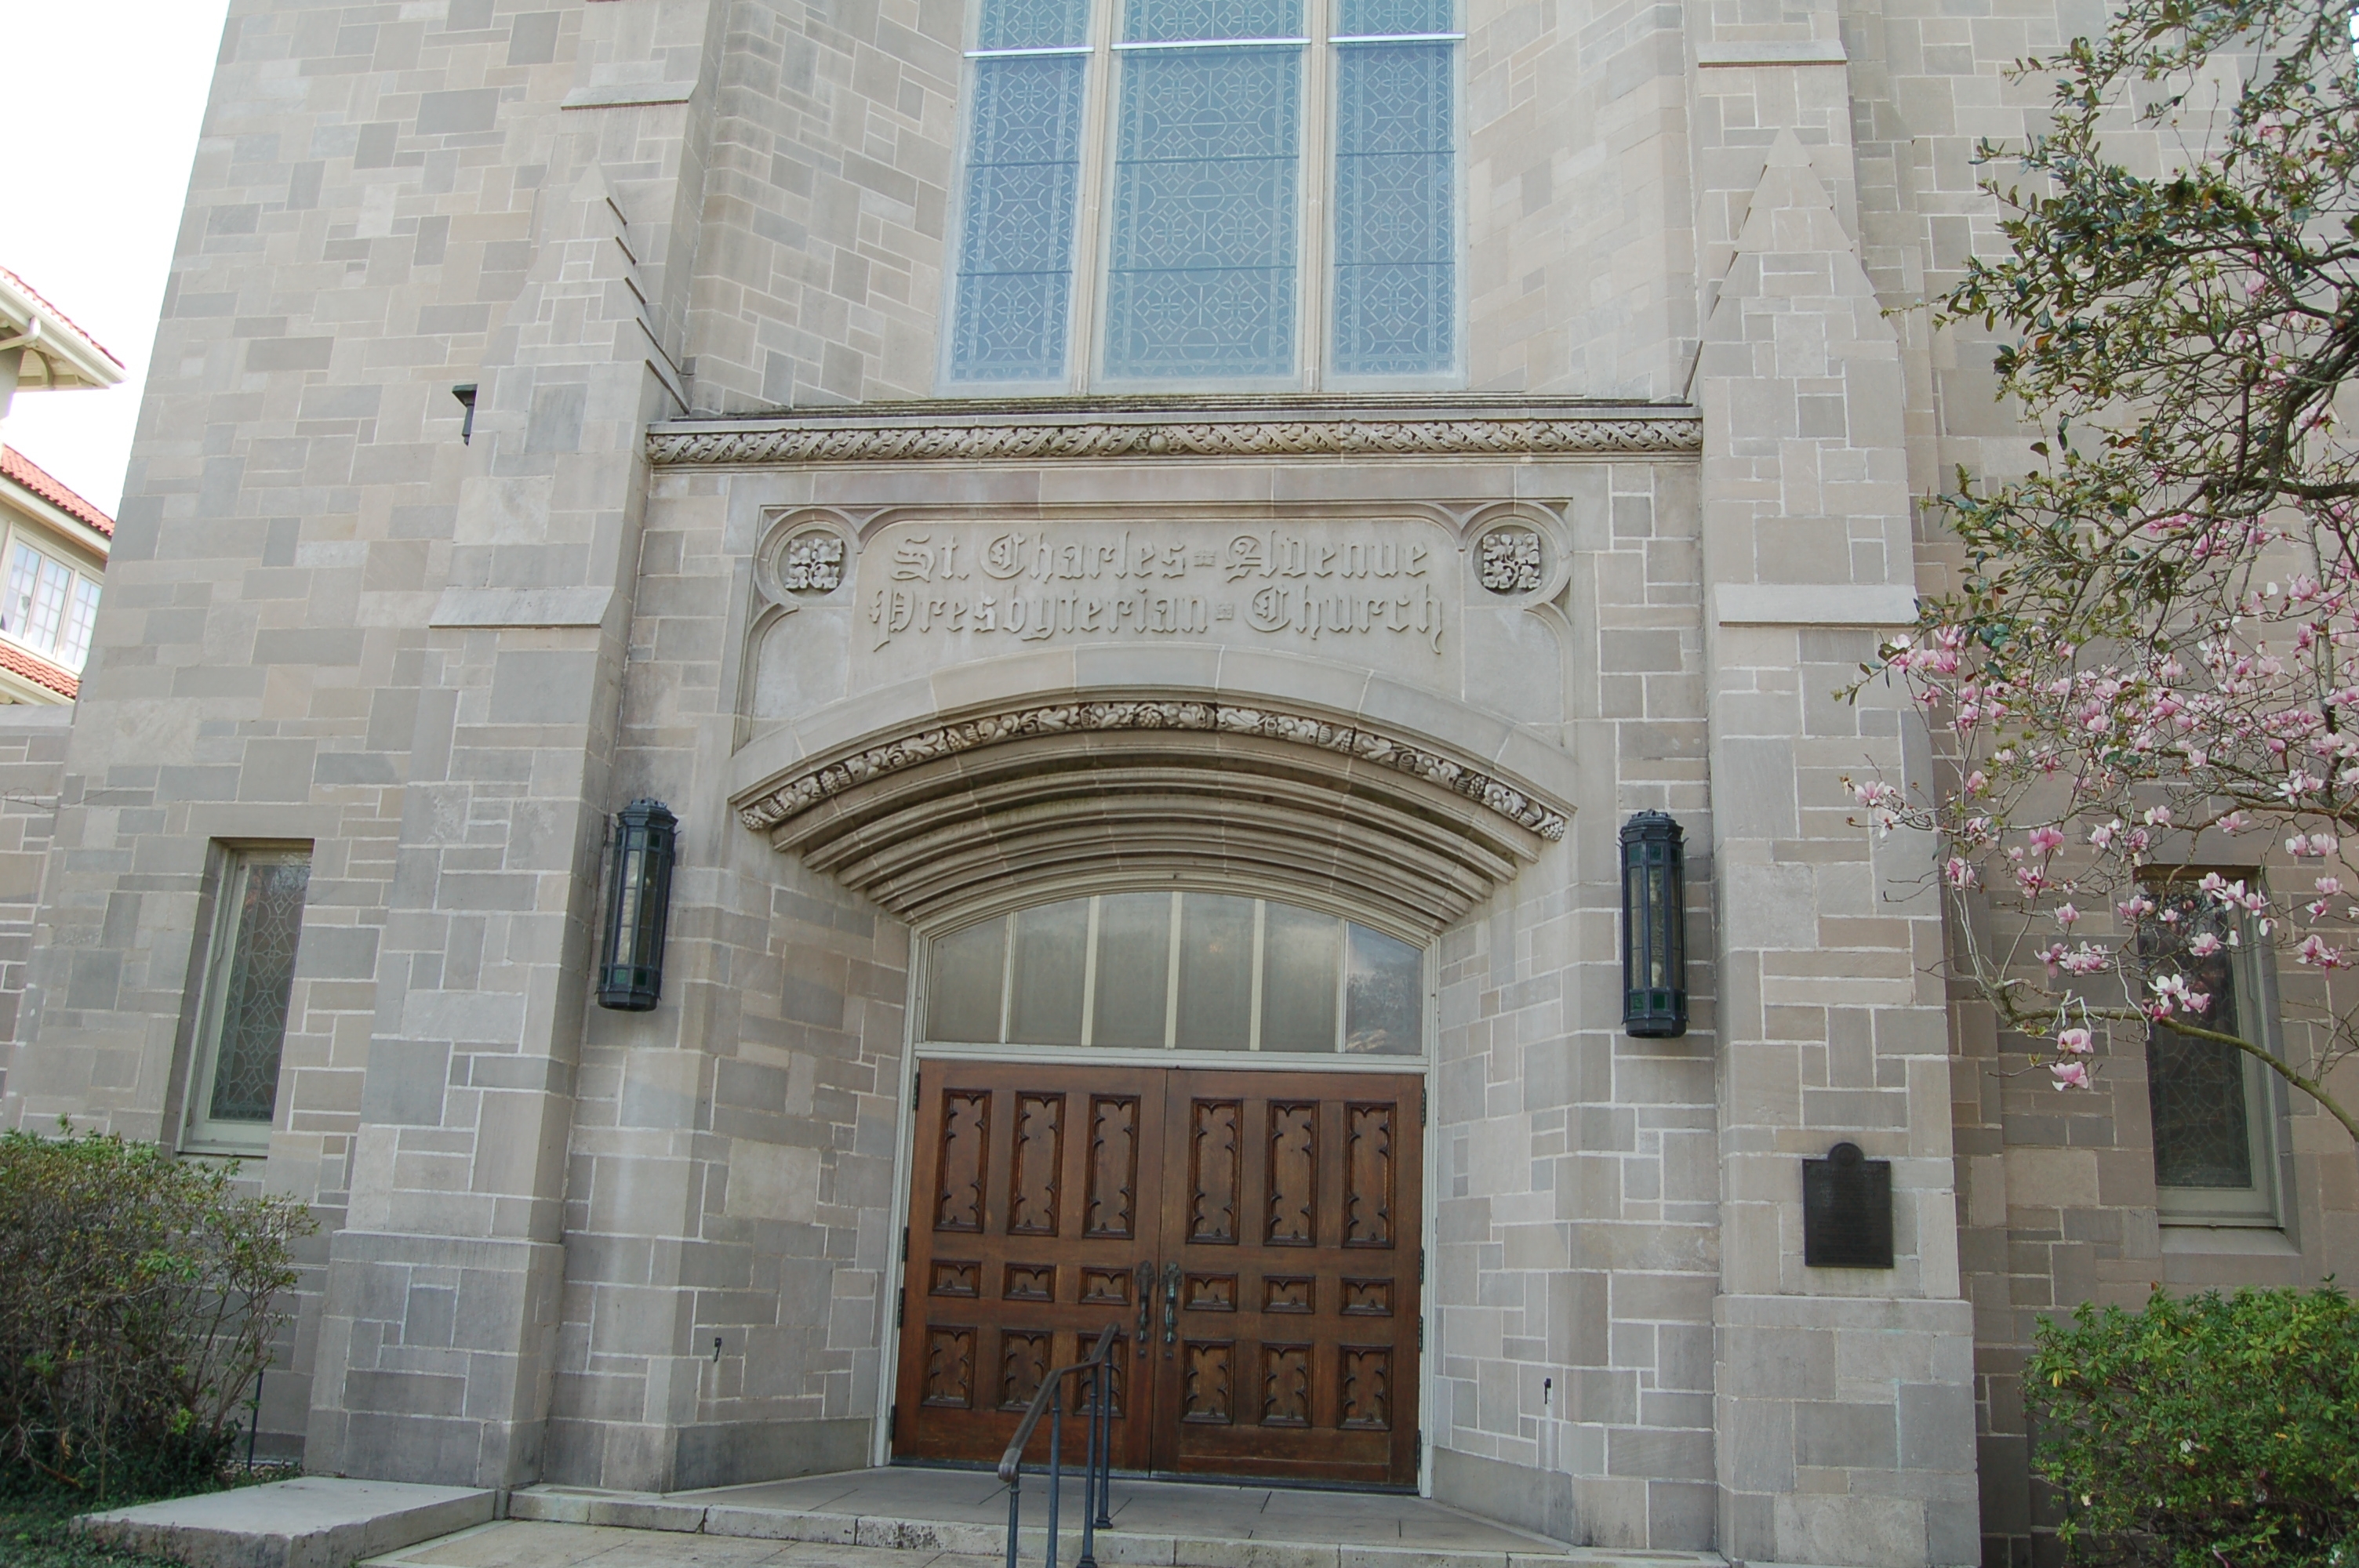 St. Charles Avenue Presbyterian Church Marker